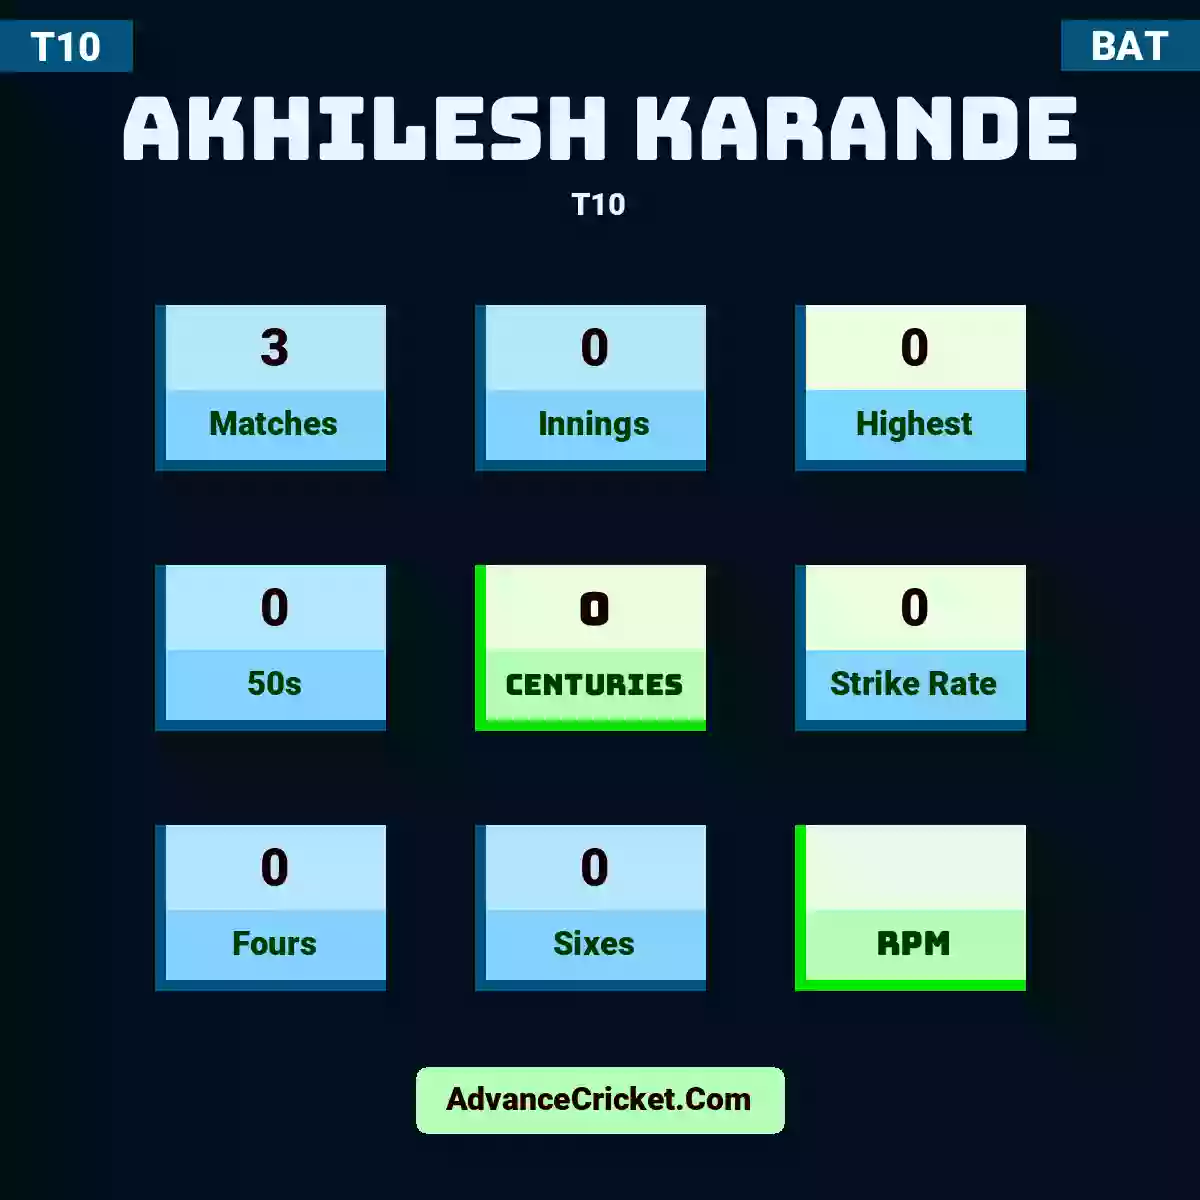 Akhilesh Karande T10 , Akhilesh Karande played 3 matches, scored 0 runs as highest, 0 half-centuries, and 0 centuries, with a strike rate of 0. A.Karande hit 0 fours and 0 sixes.